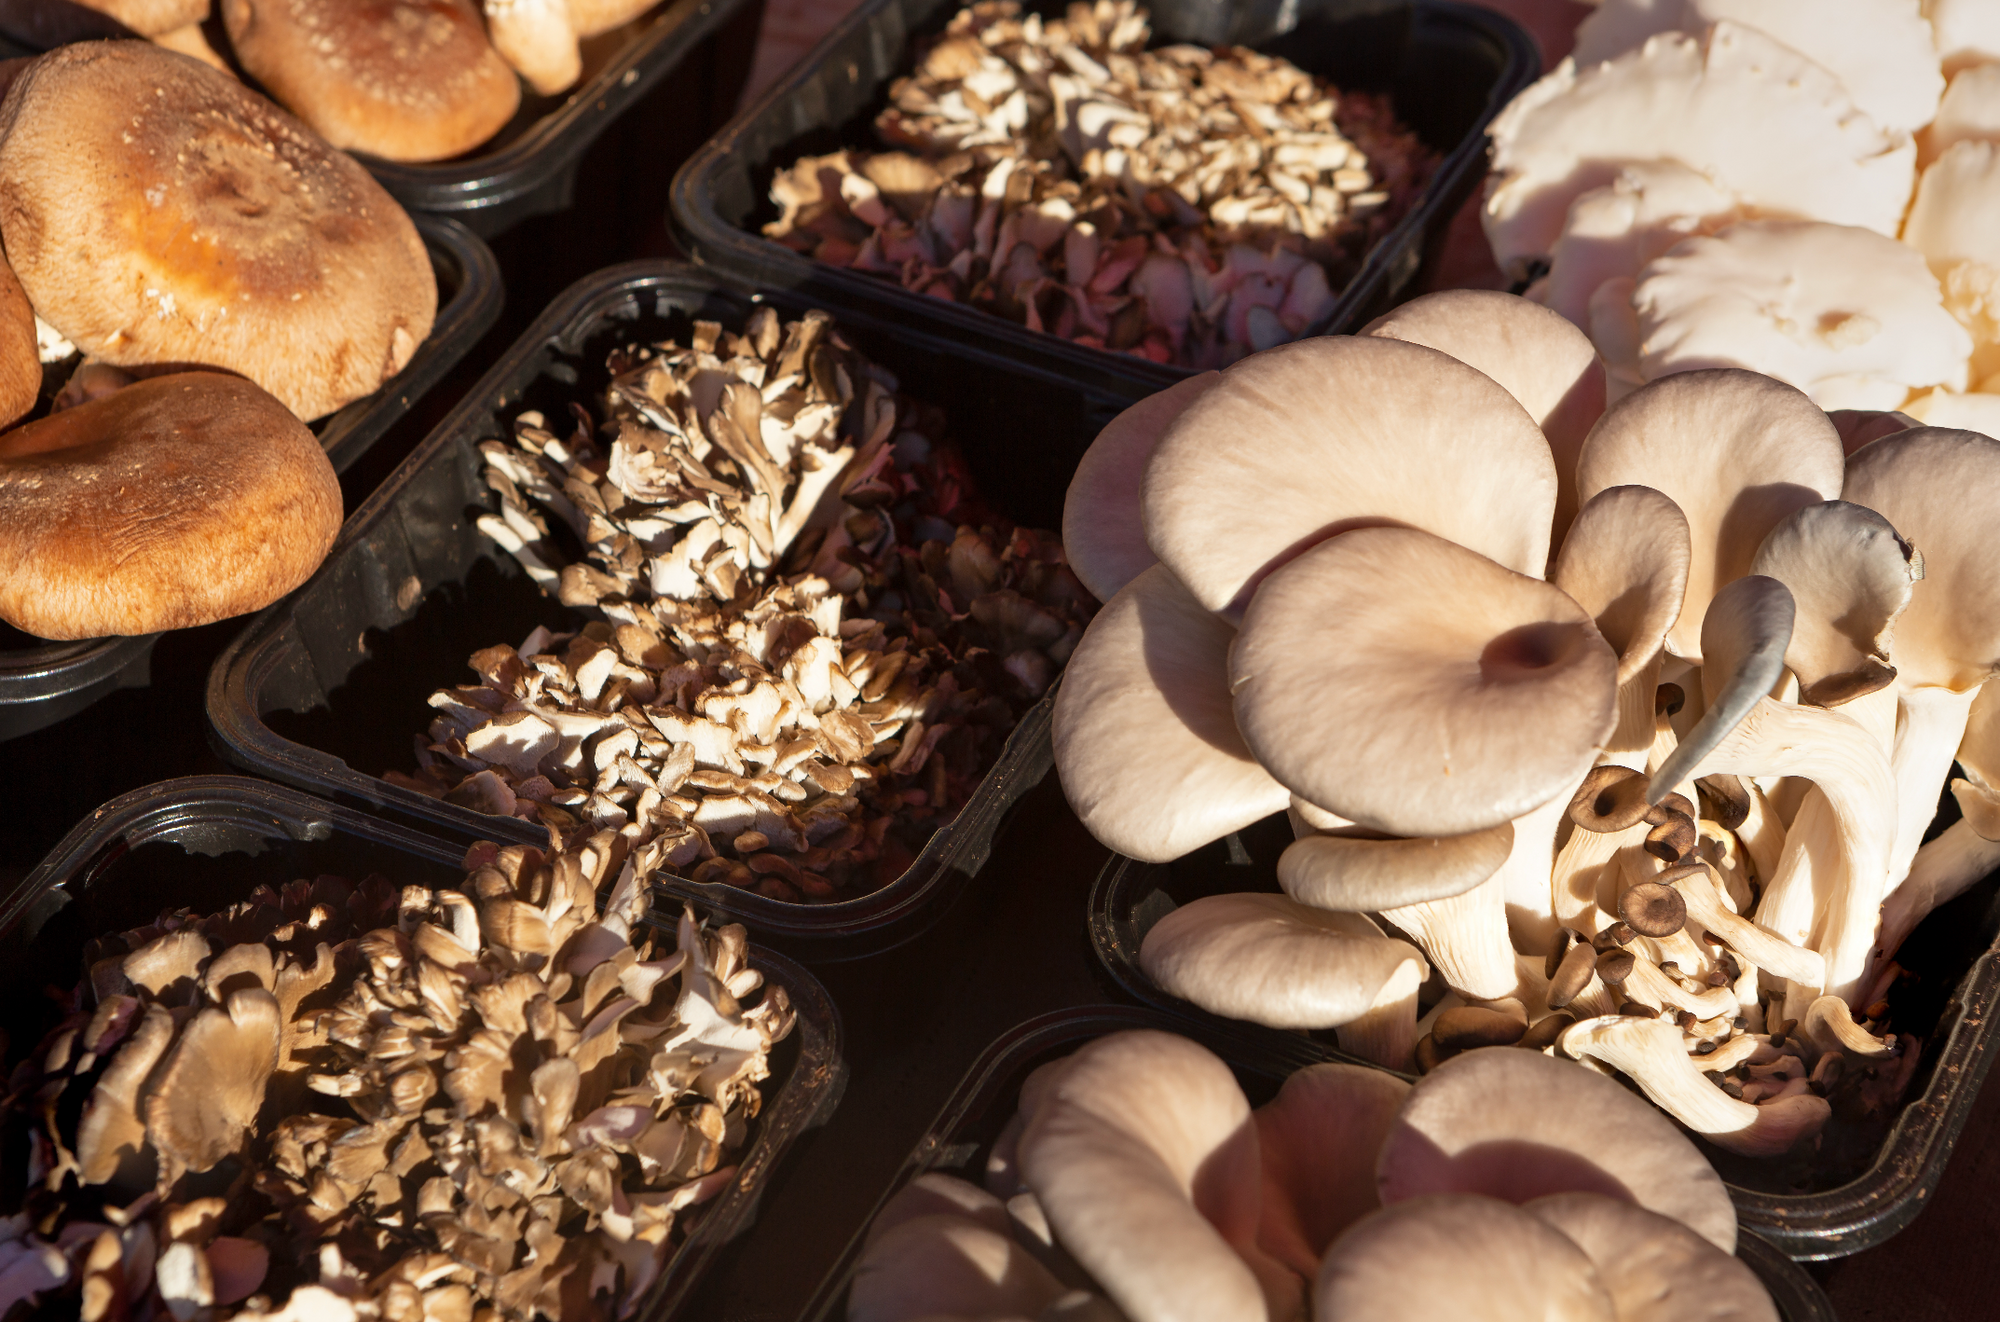 Array of mushrooms include shiitake and maitake